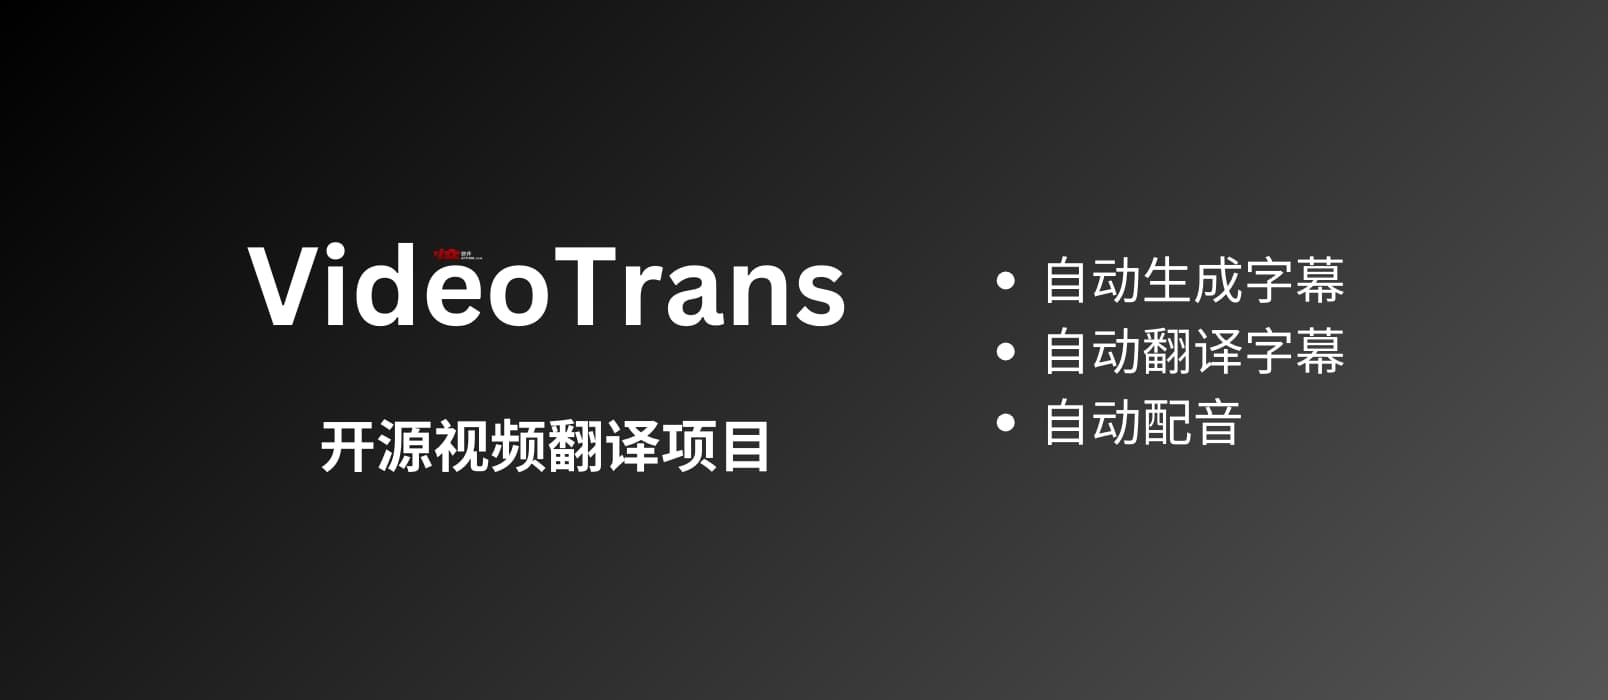 VideoTrans - 开源视频翻译项目：自动识别并生成字幕后，翻译 + 配音